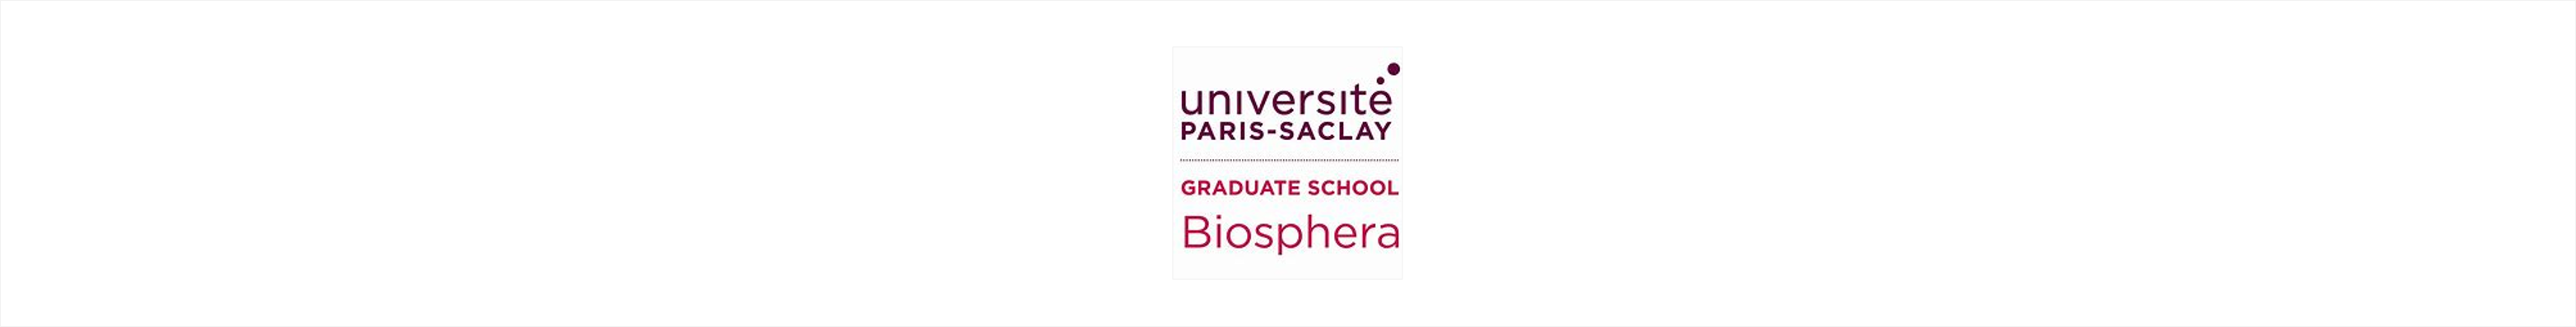 Graduate School Biosphera